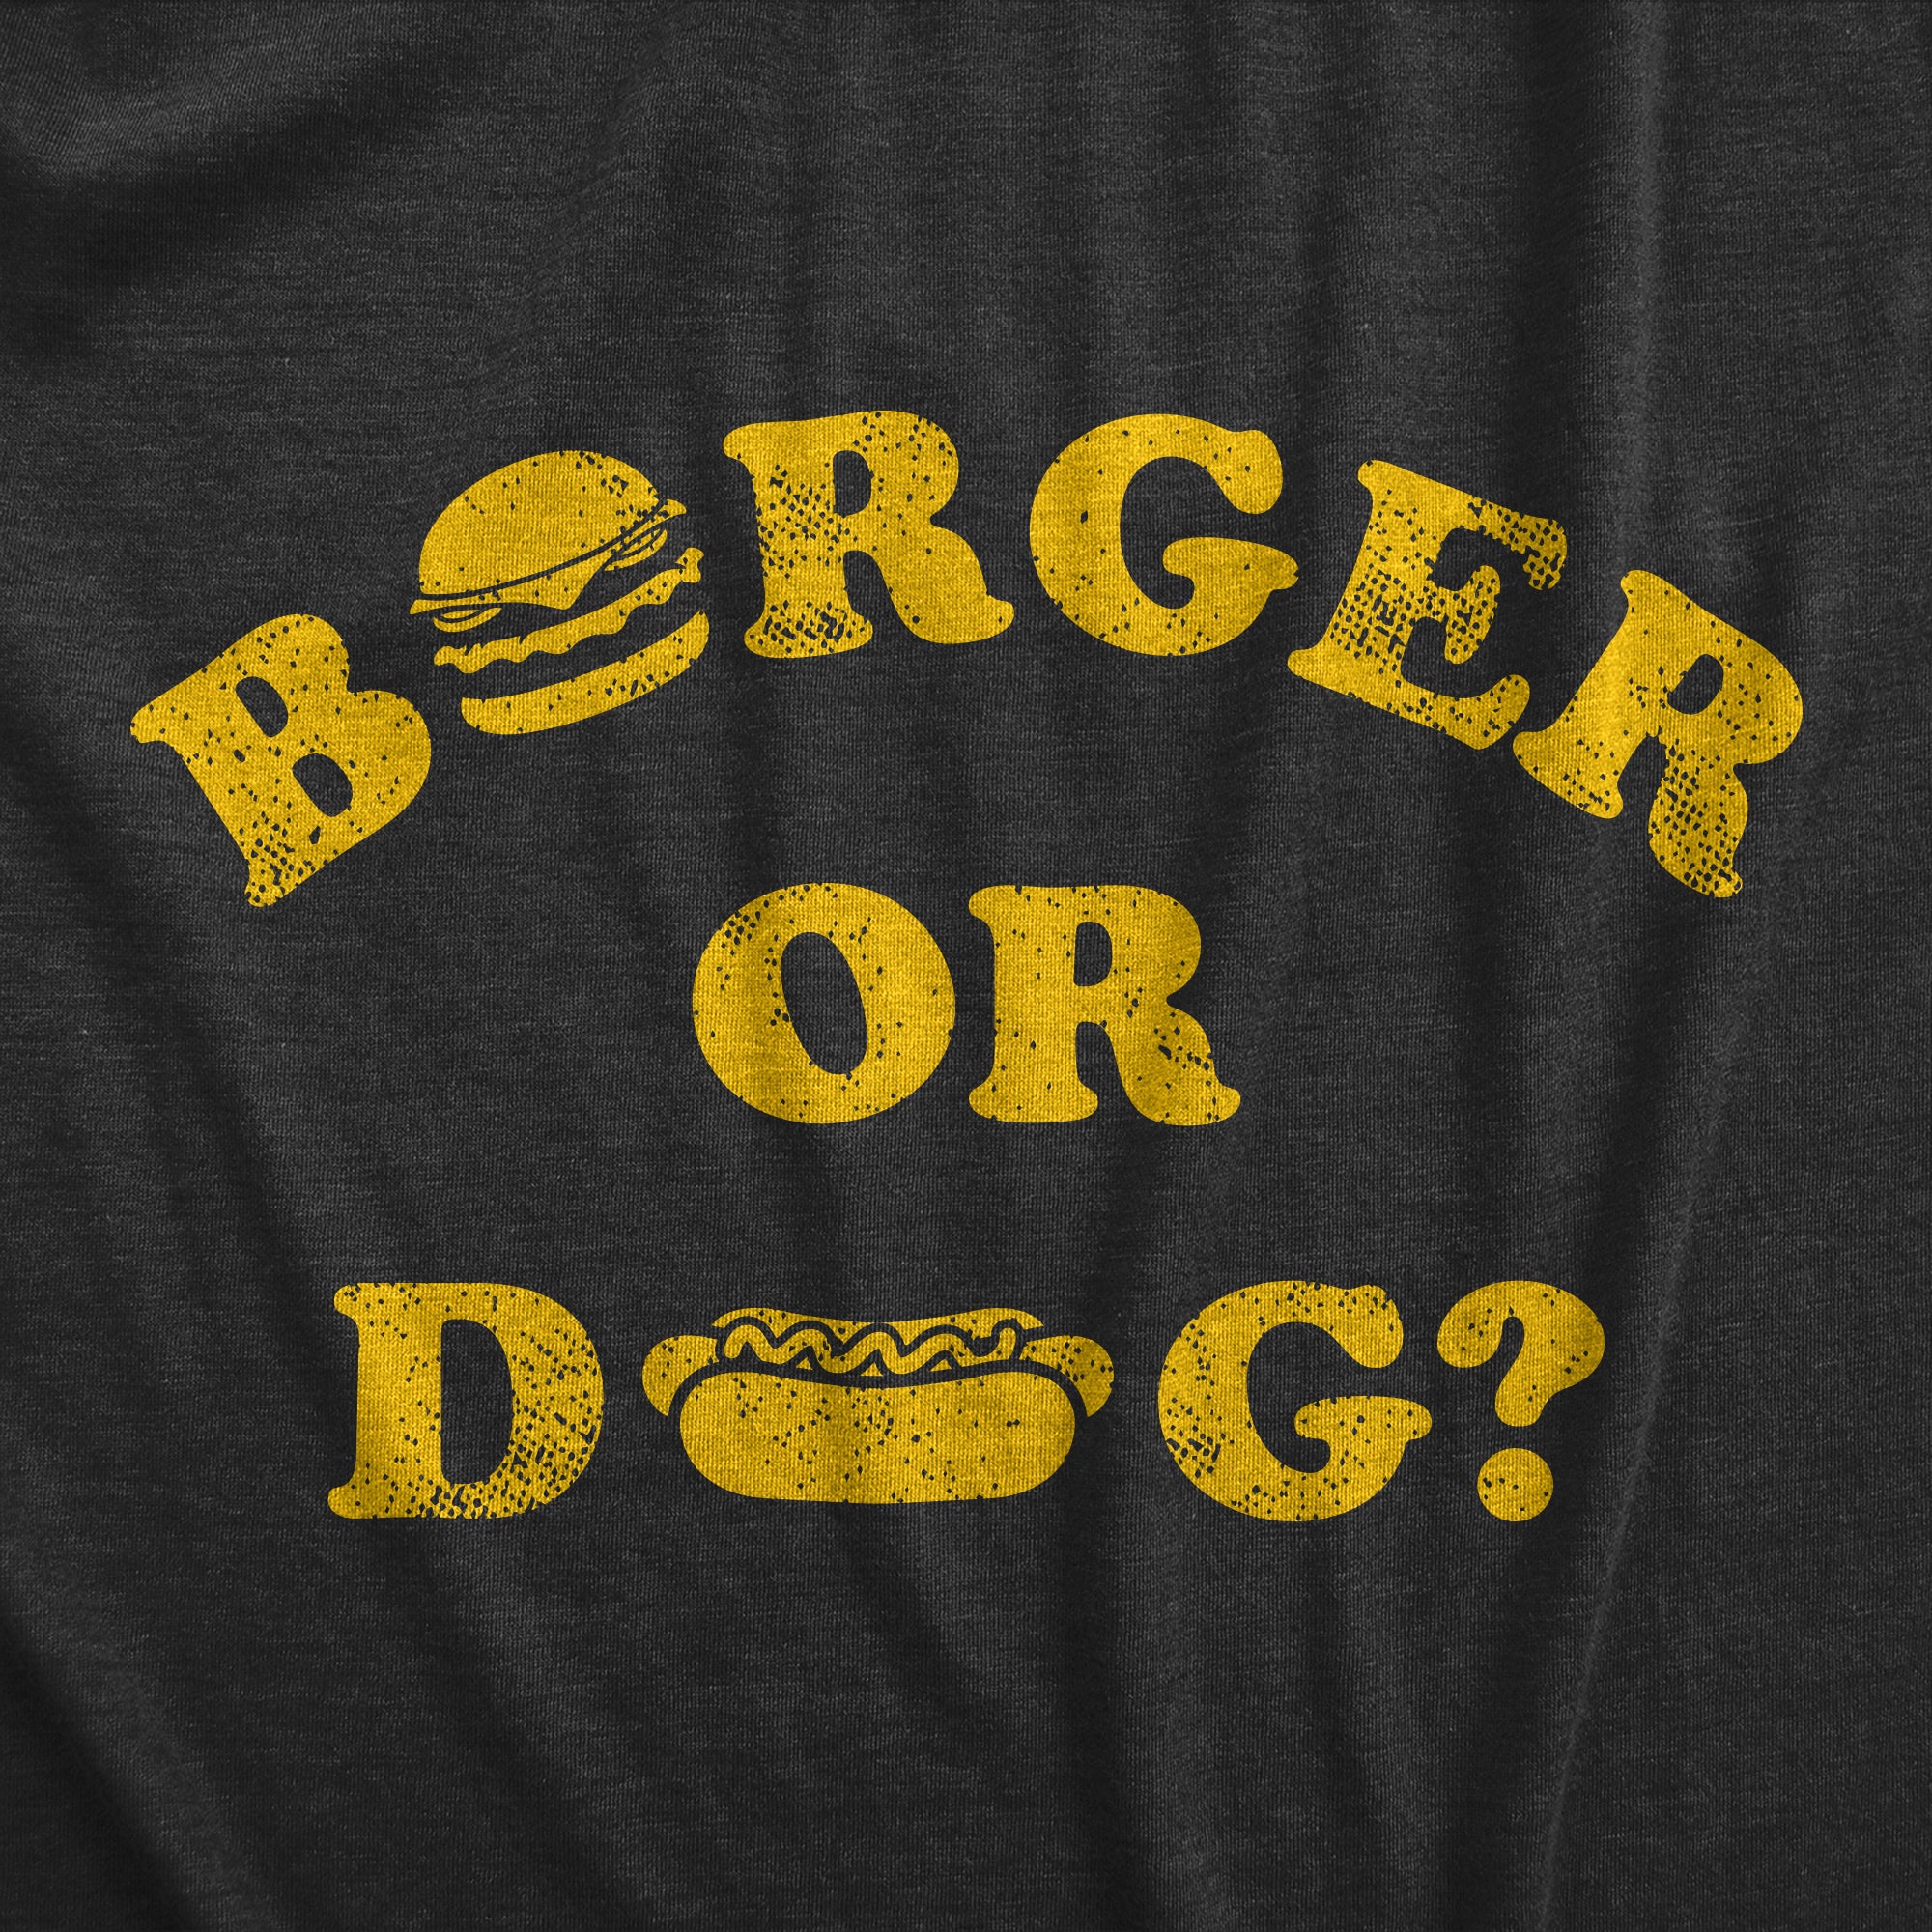 Funny Heather Black - BURGERDOG Burger Or Dog Mens T Shirt Nerdy Food Tee